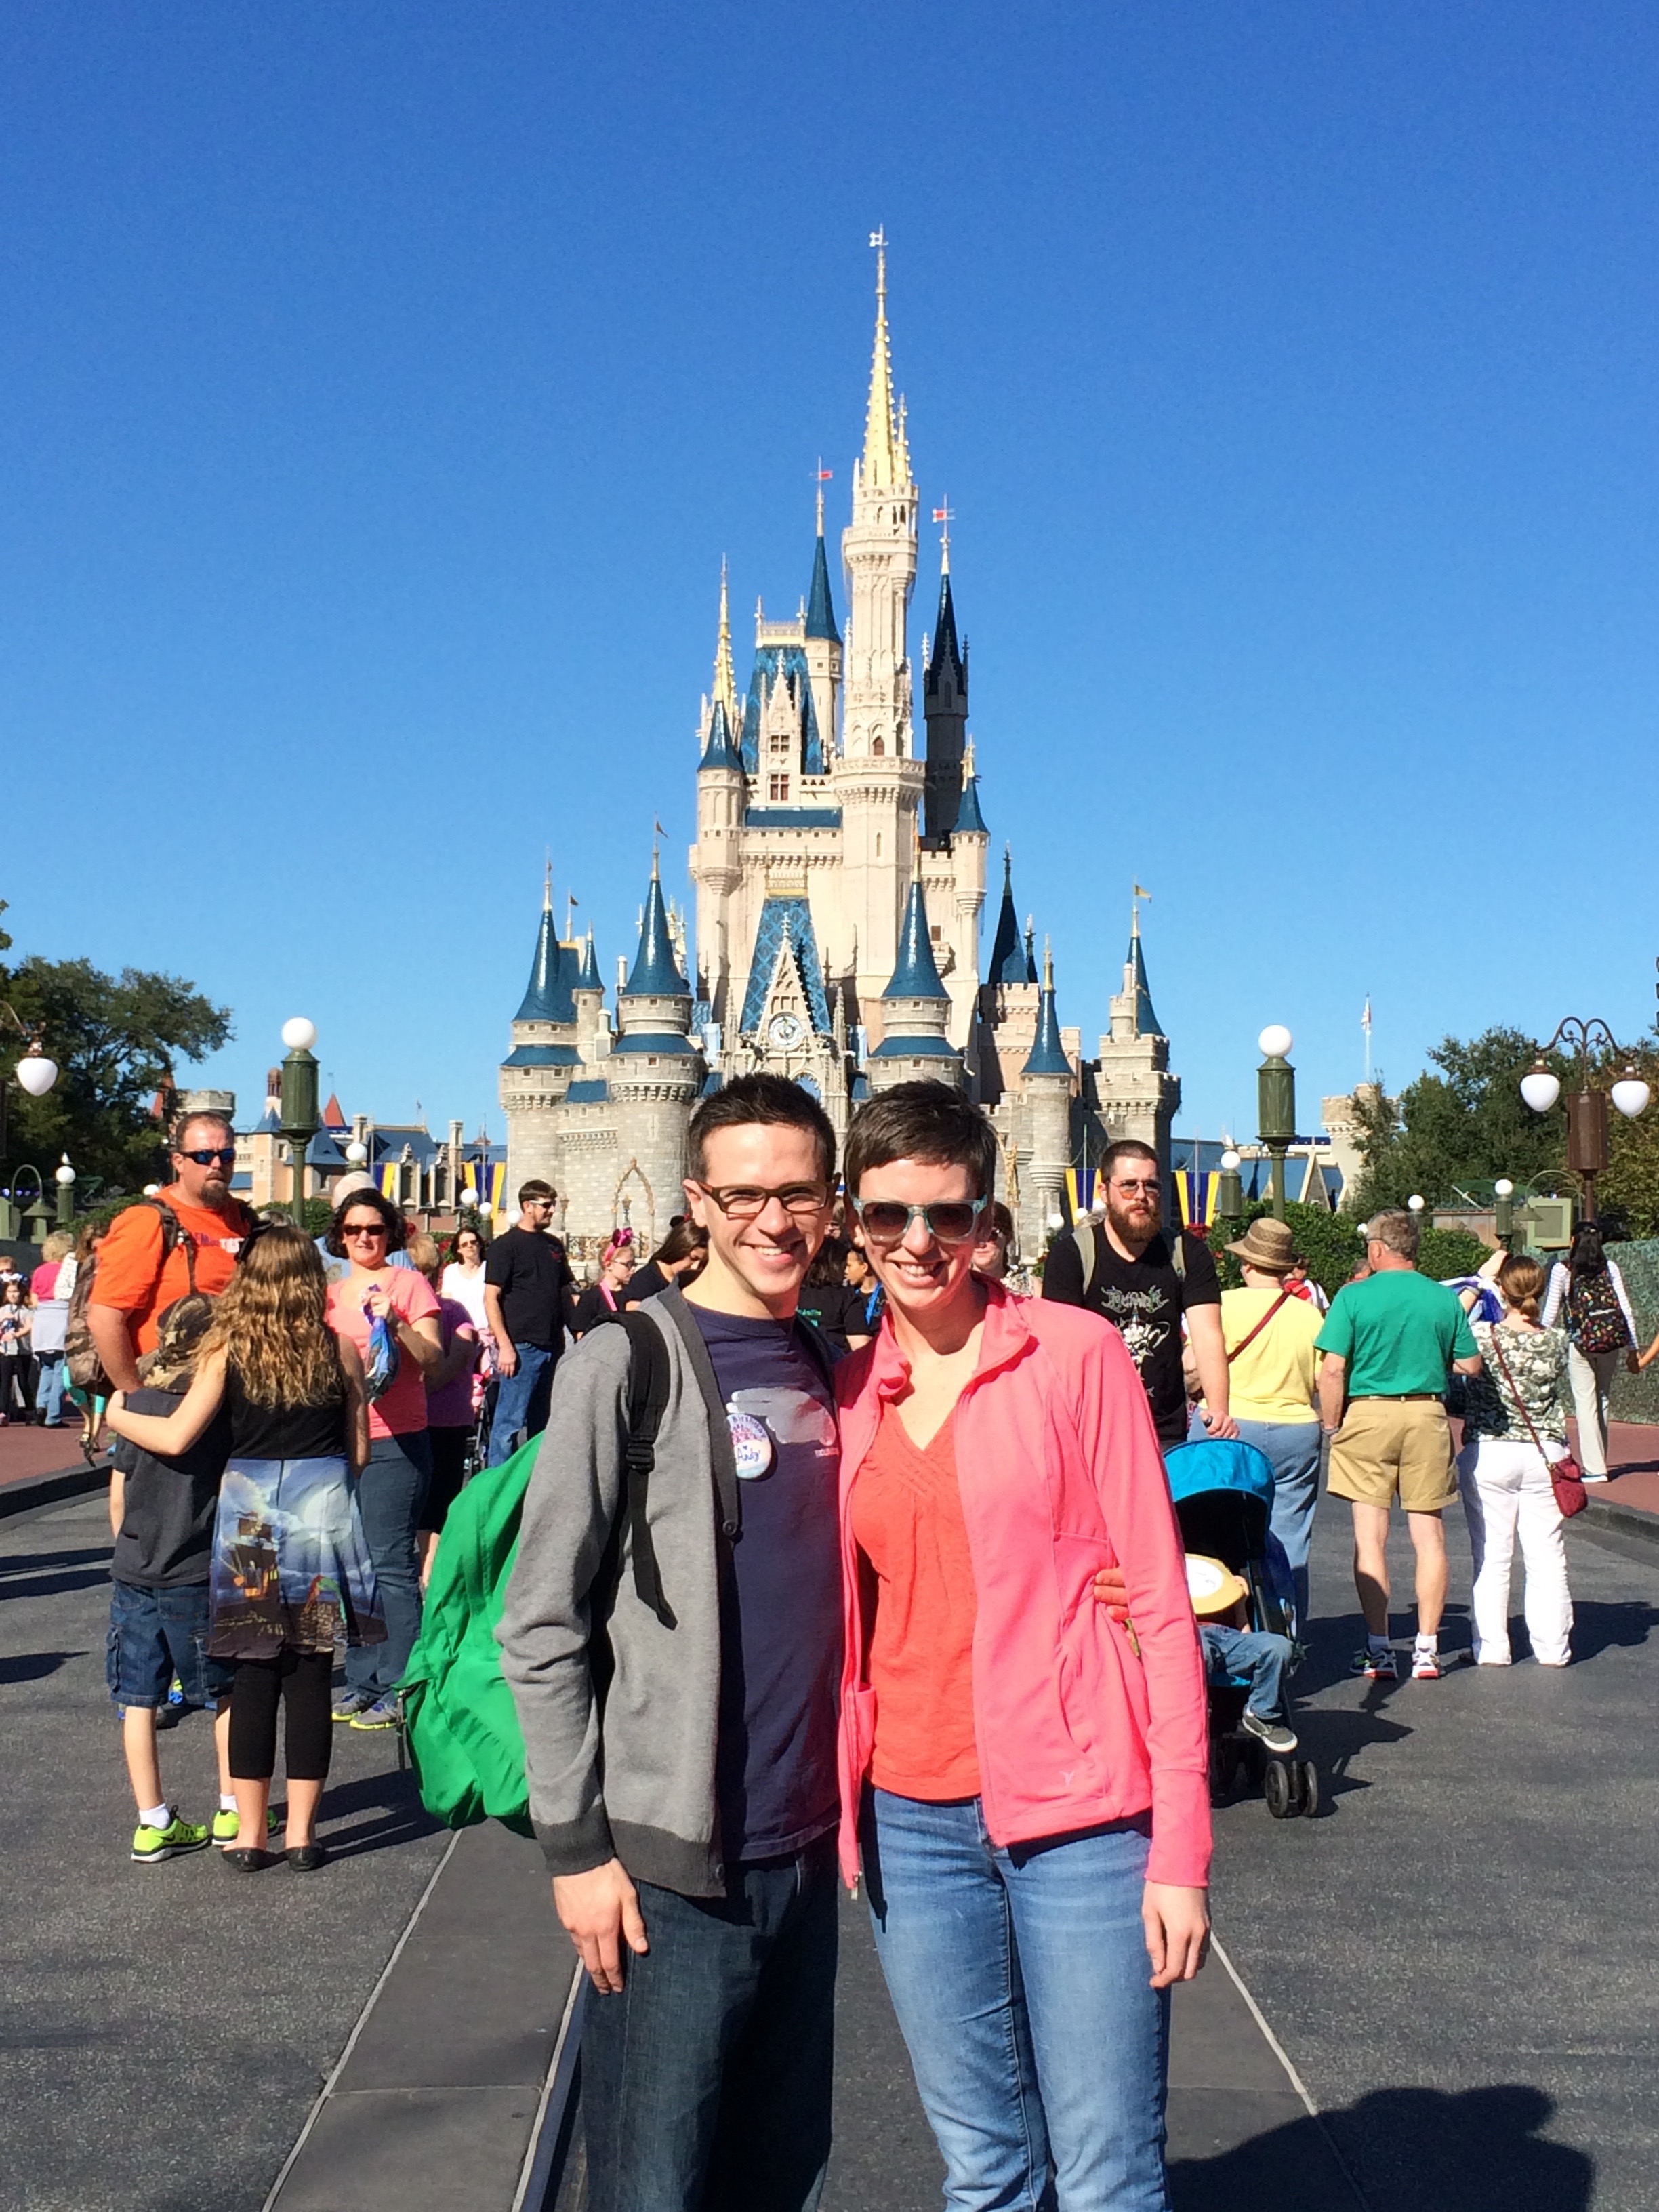 Me and my wife Sarah at Magic Kingdom